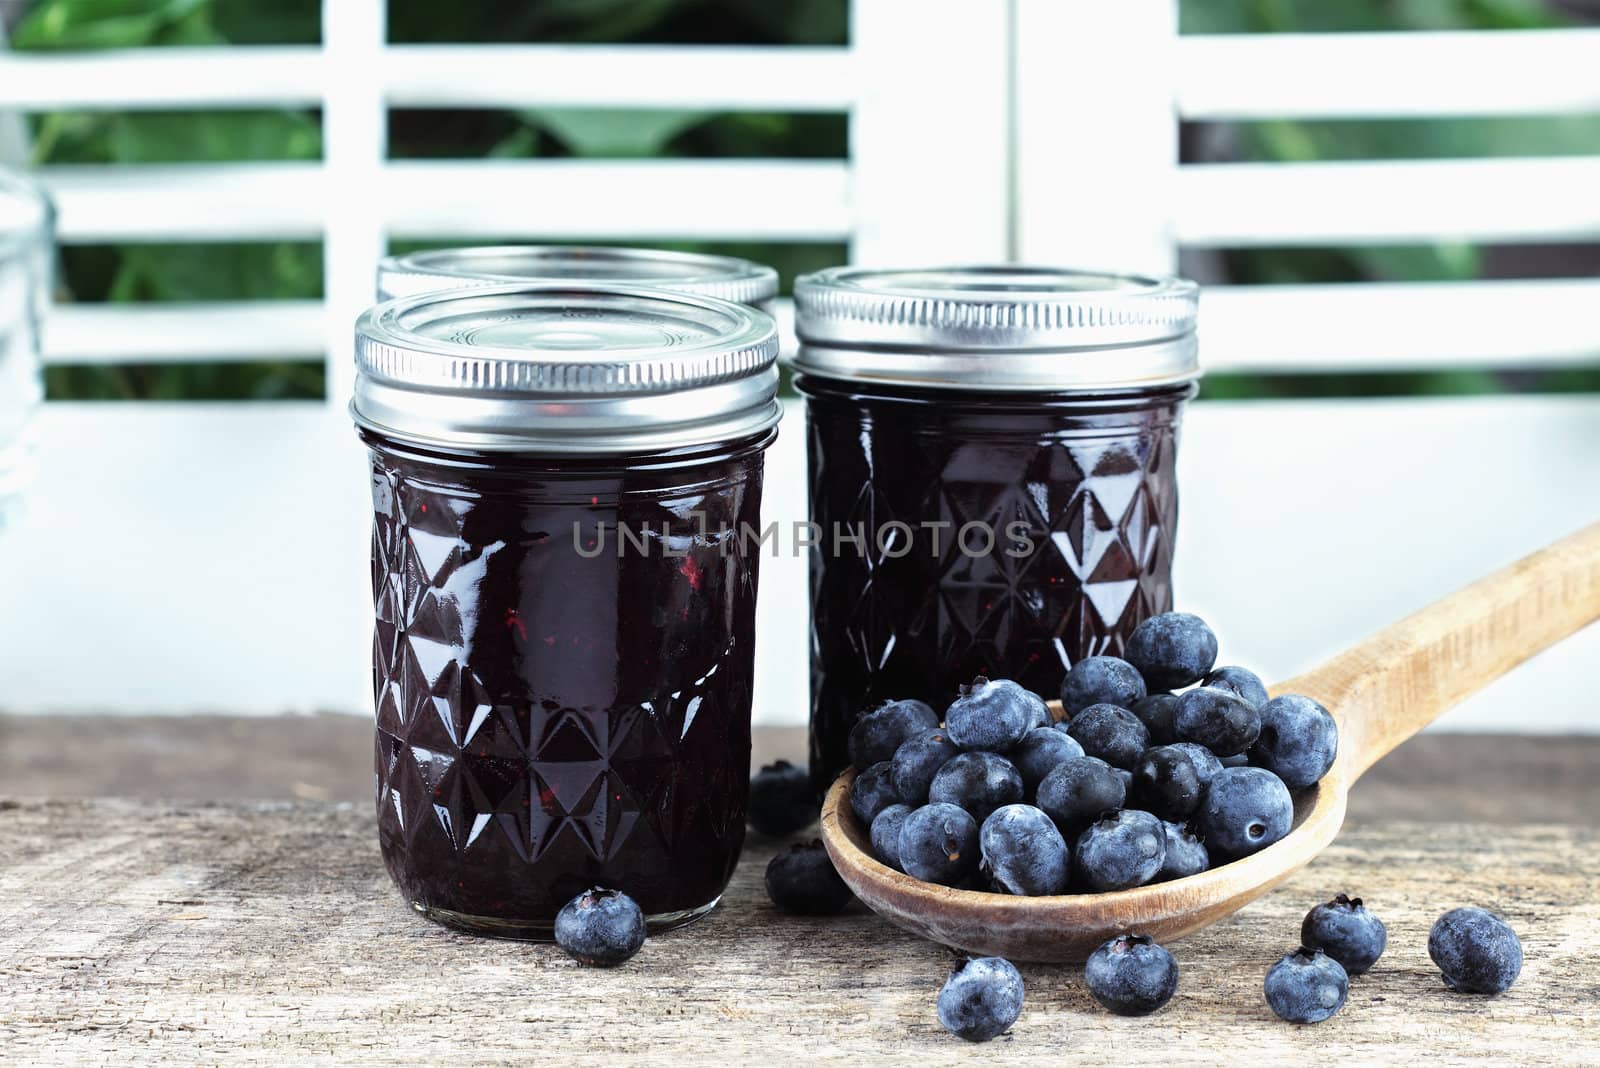 Homemade blueberry jam or preserves with fresh blueberries.
